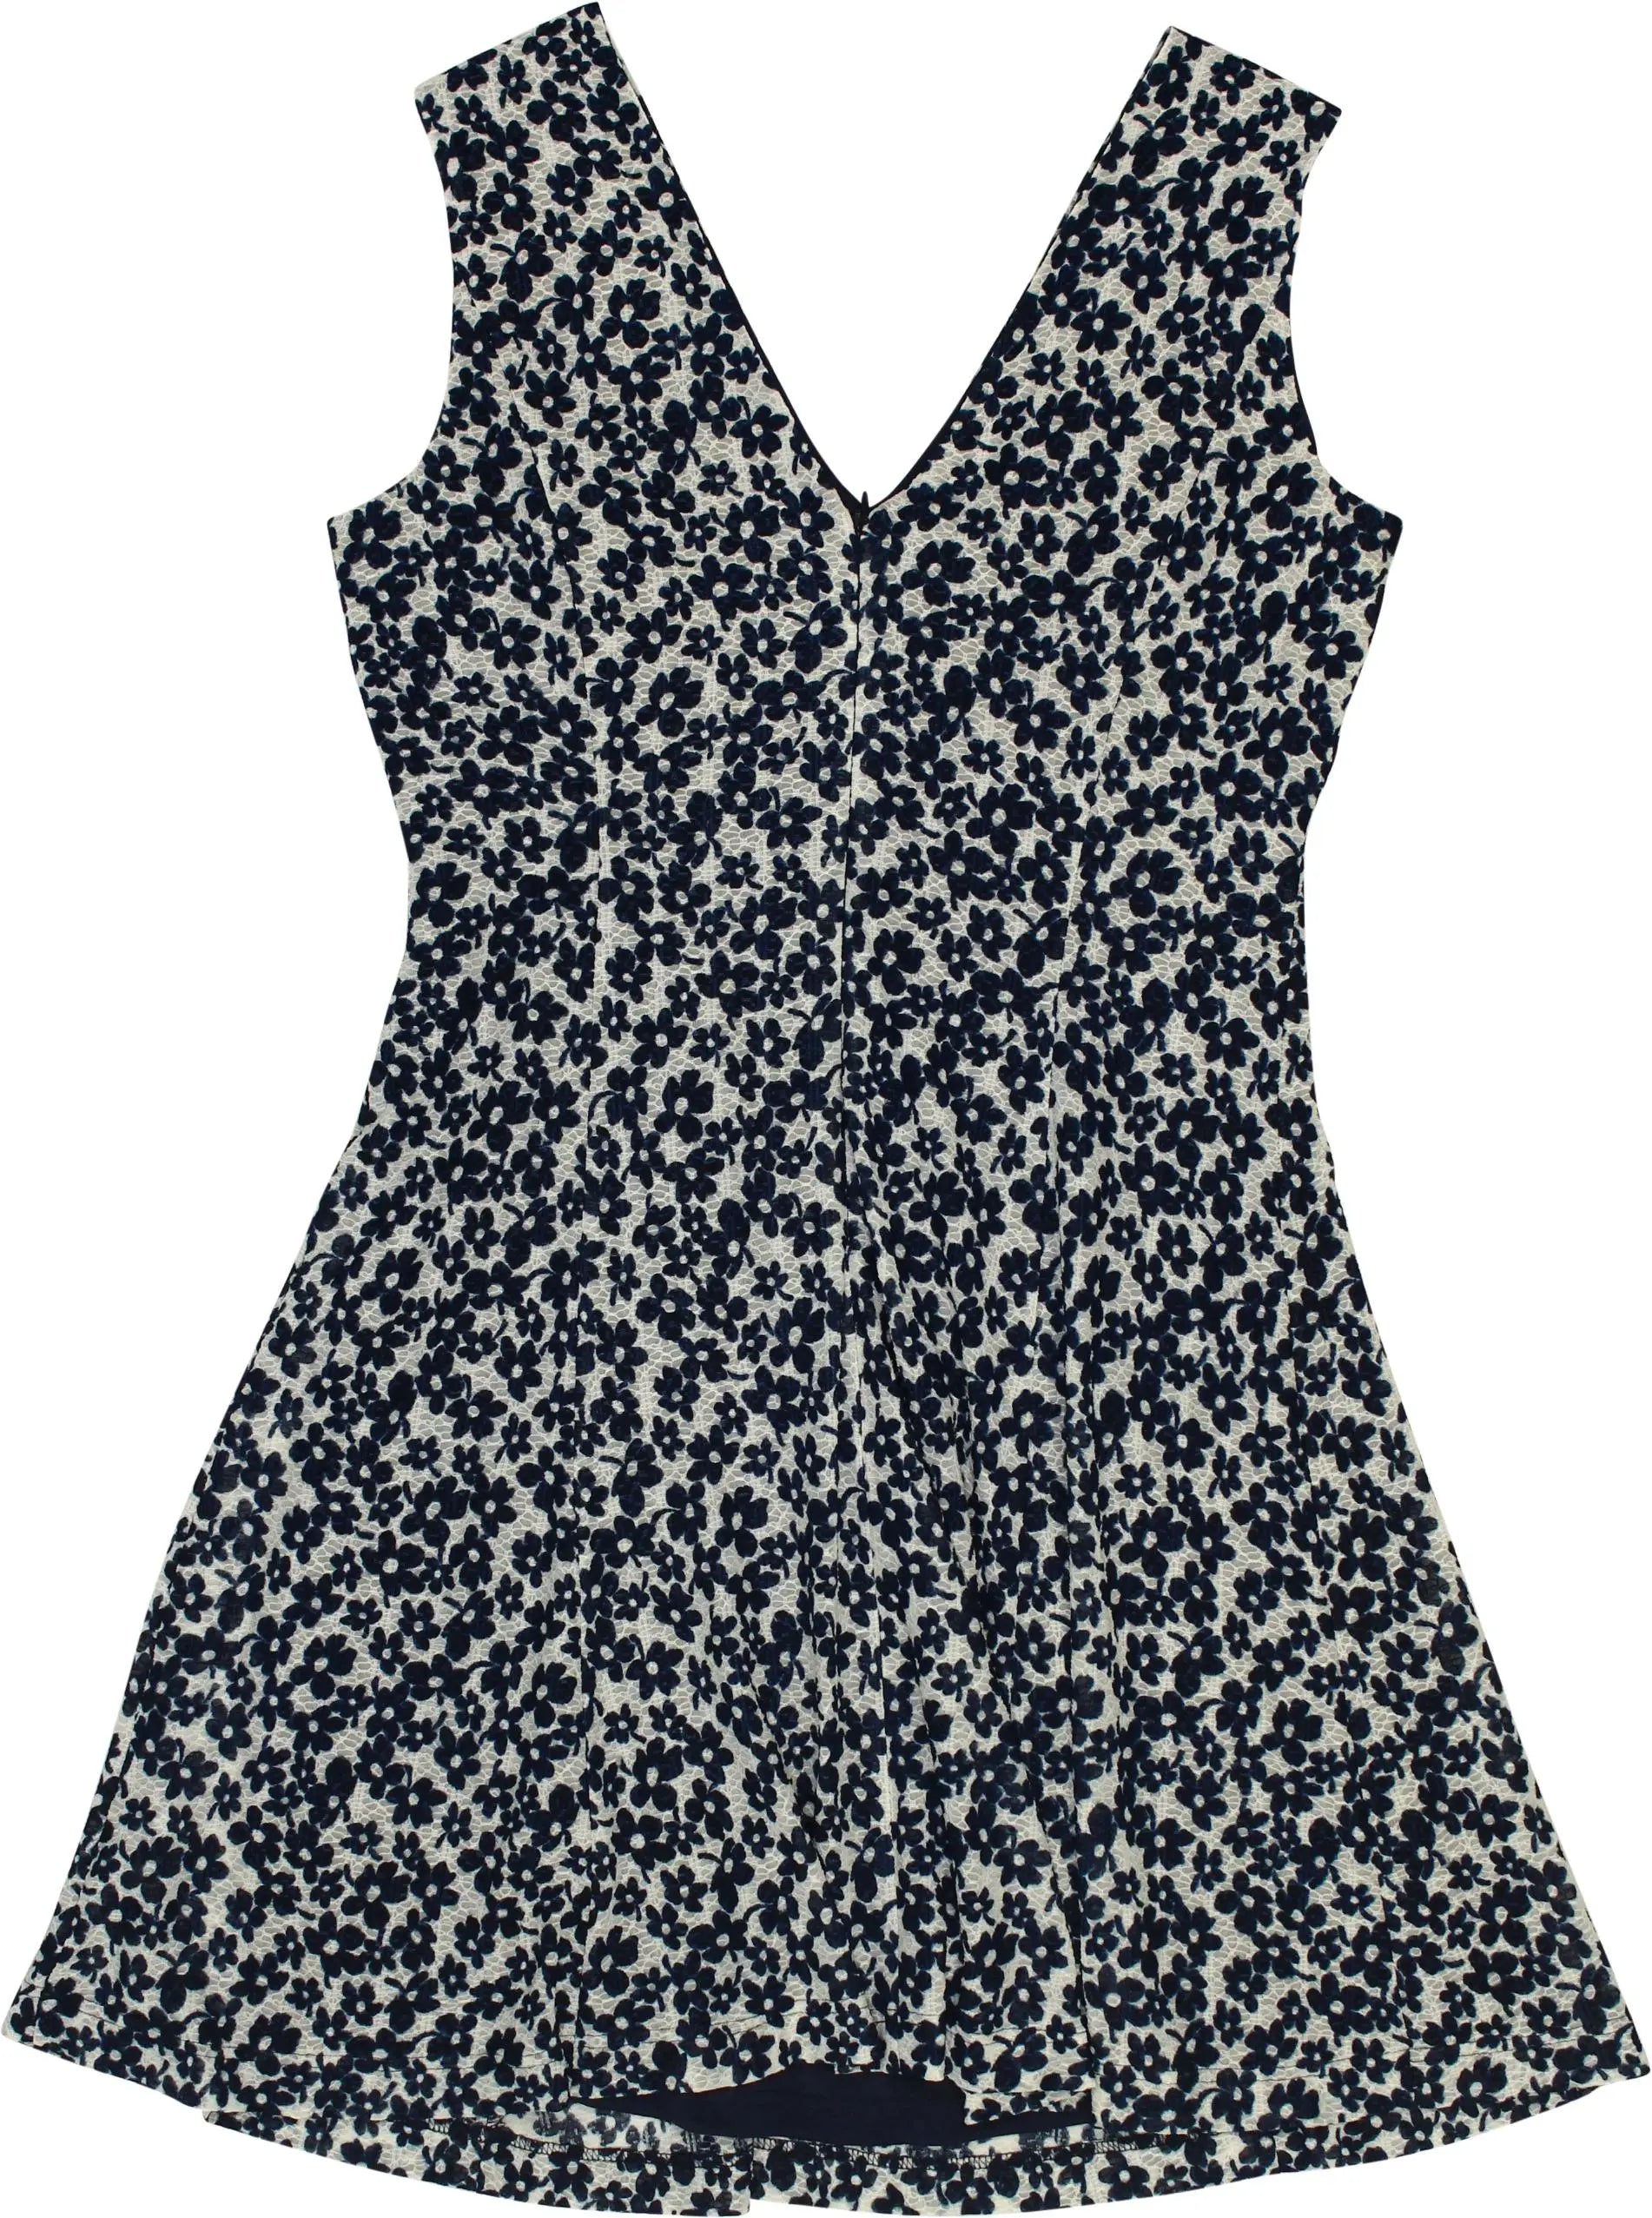 Esprit - Floral Dress- ThriftTale.com - Vintage and second handclothing